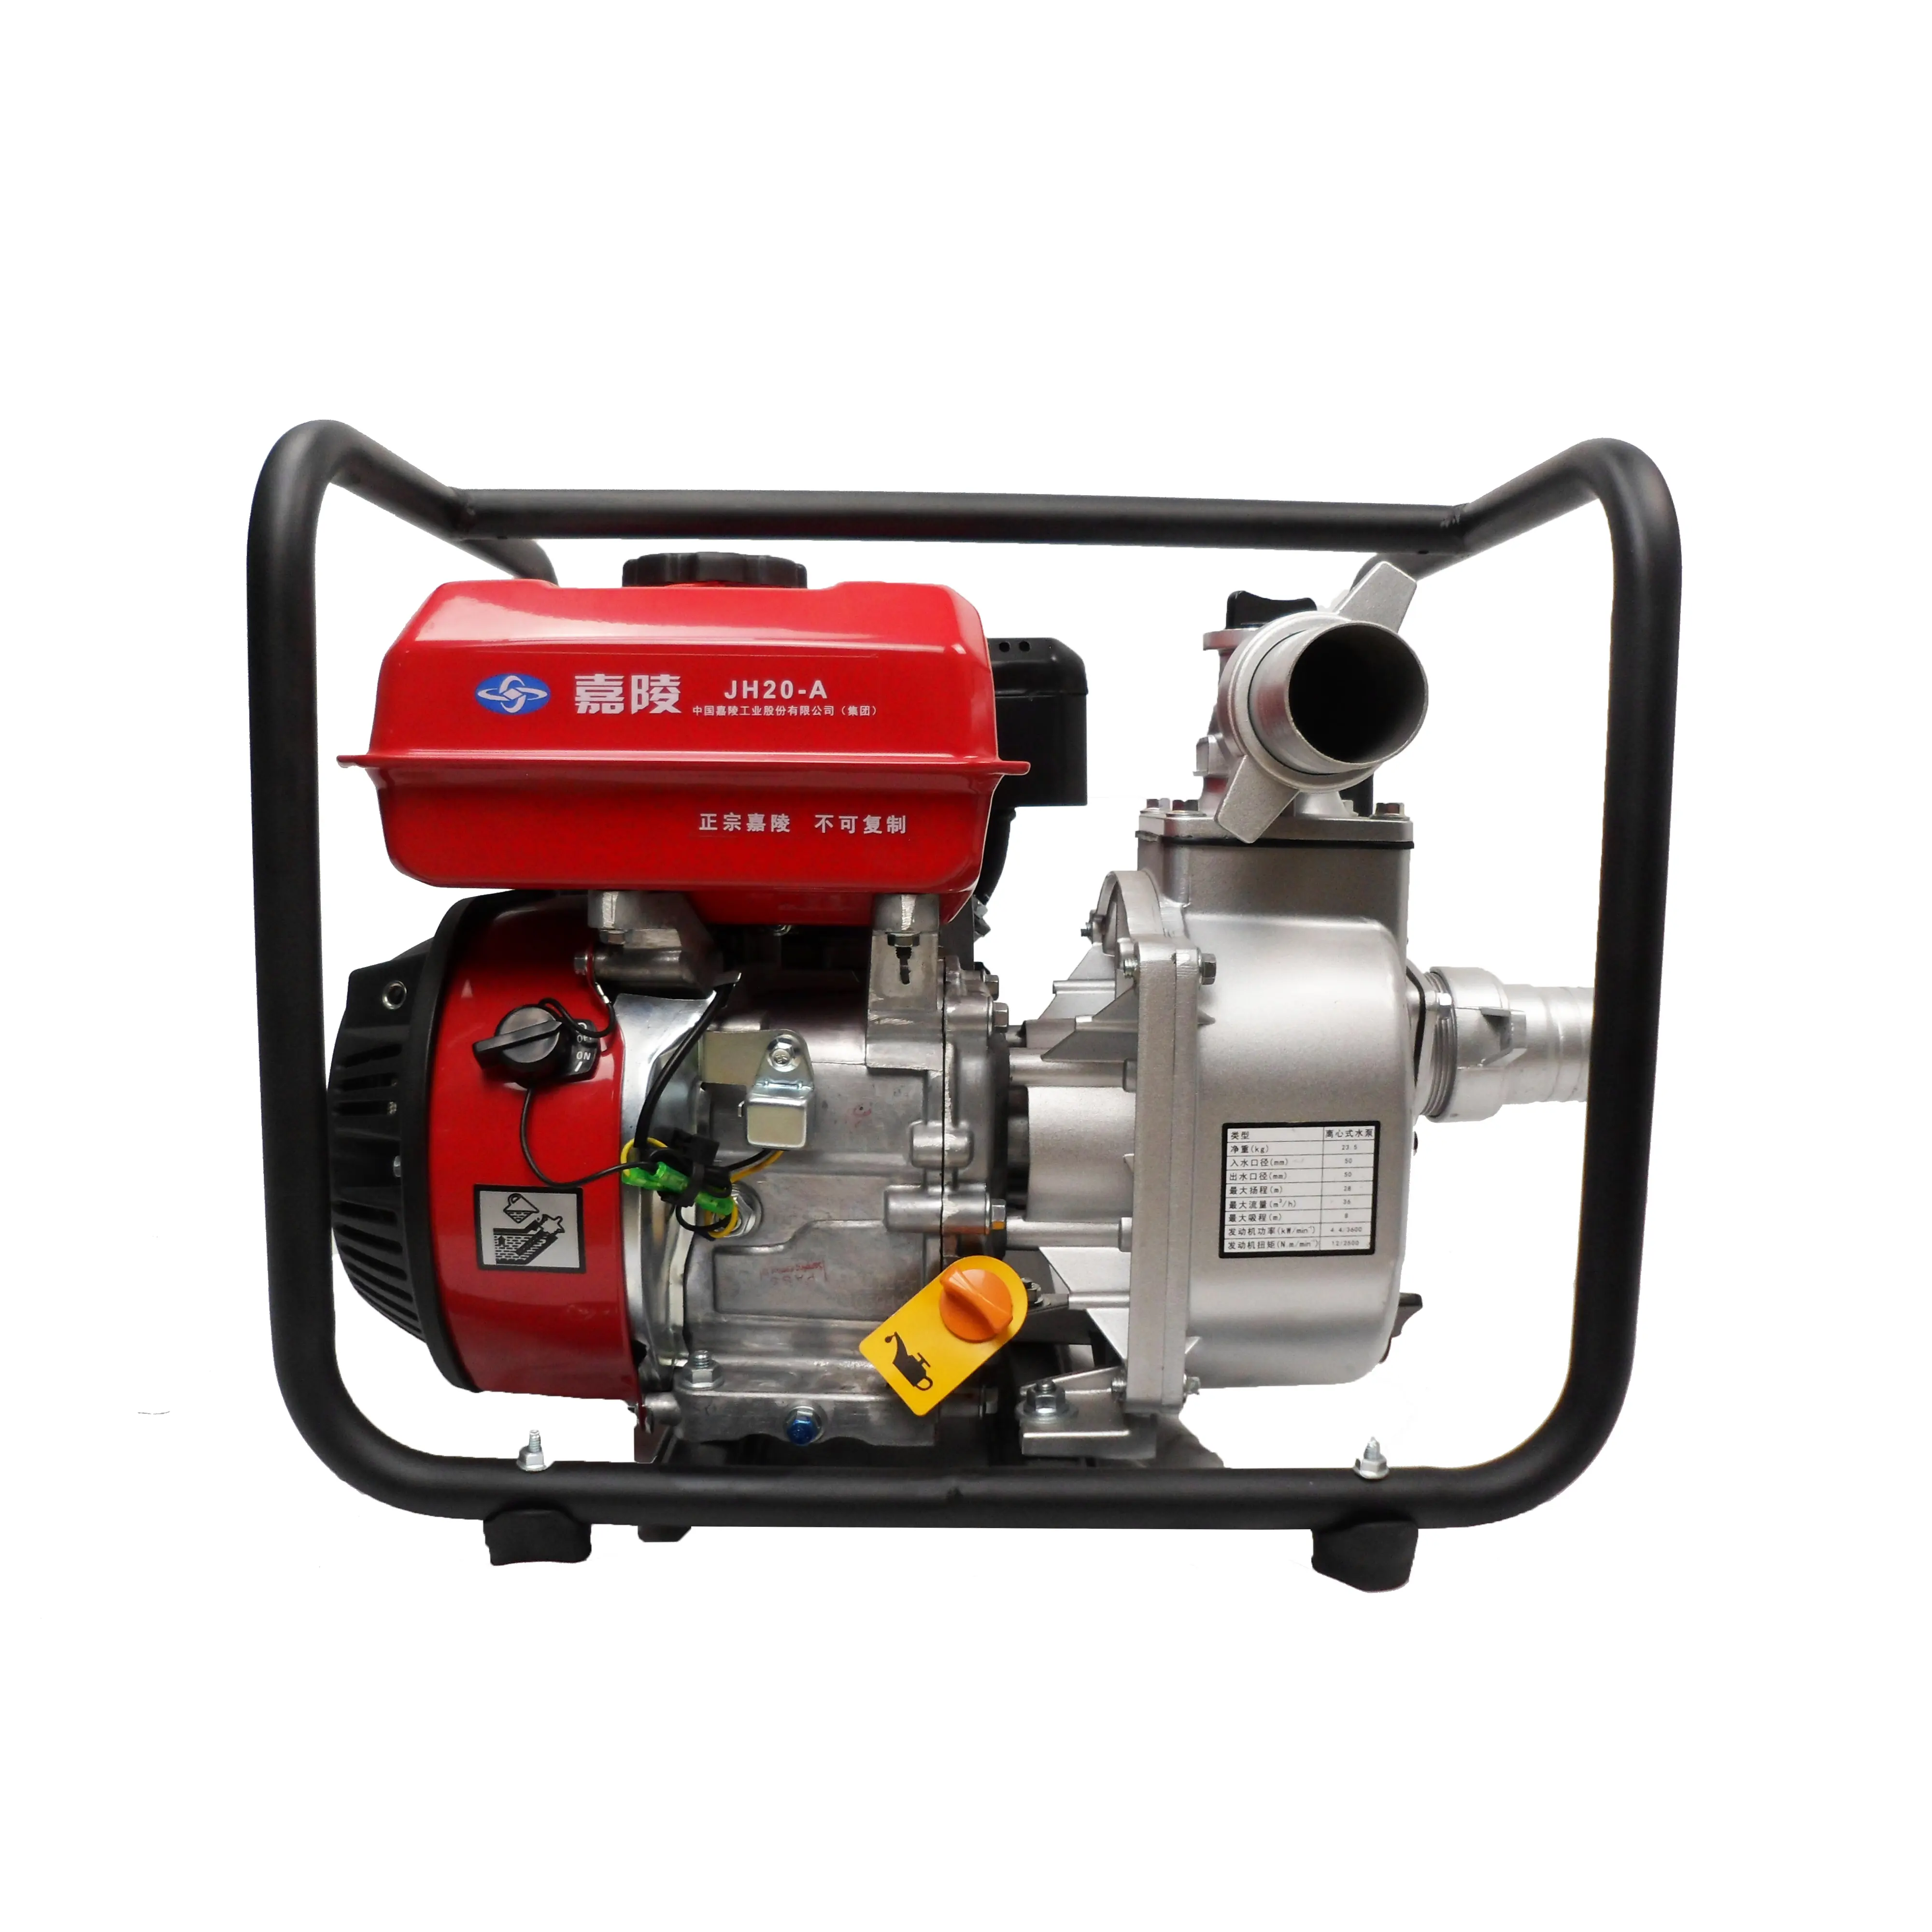 Diesel Water Pump 4 Inch Agriculture Hydraulic electric Water Pump Diesel Engine 6 Inch for agricultural irrigation